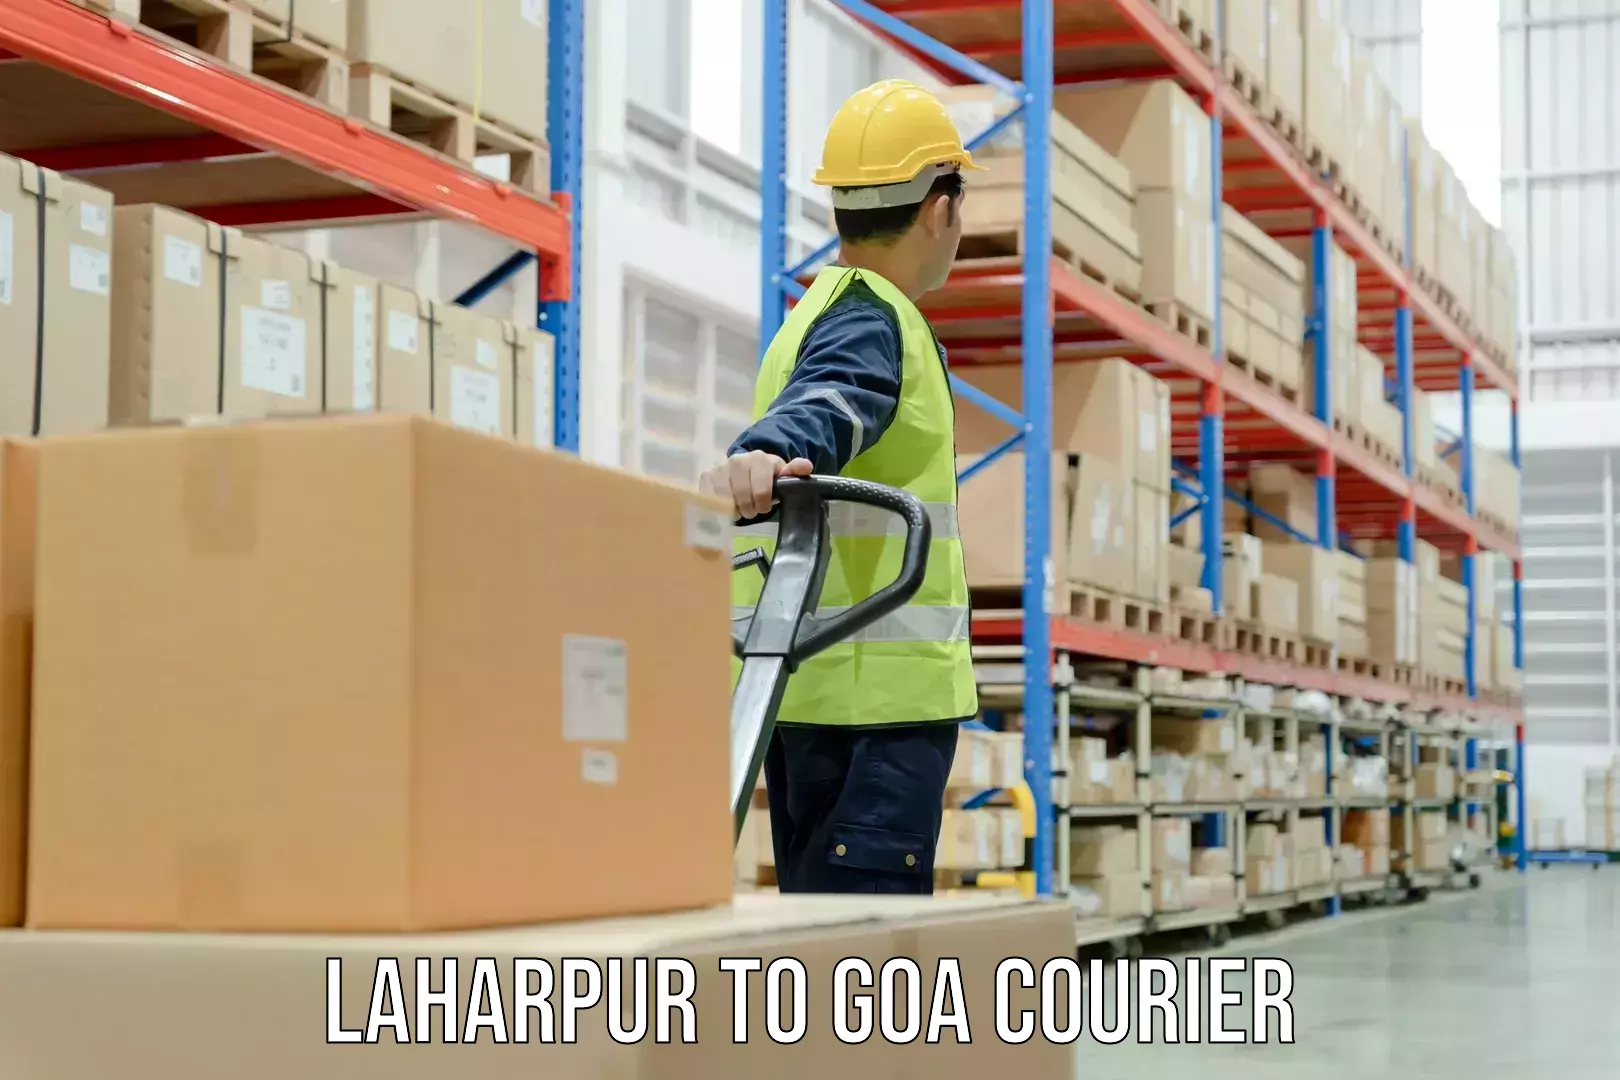 Courier app Laharpur to Margao